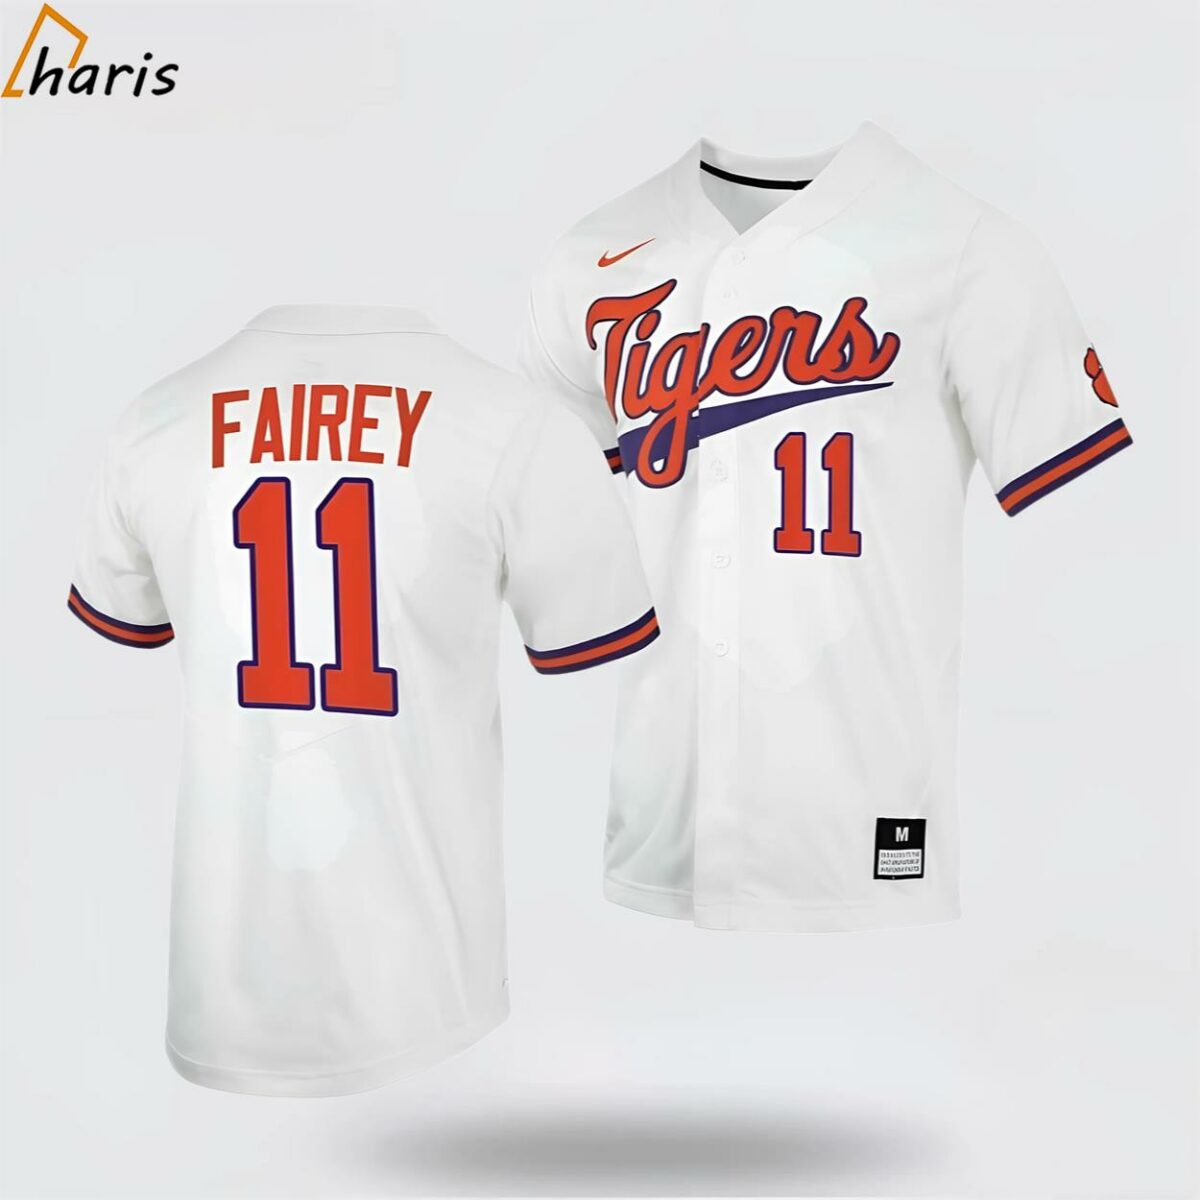 Personalized Clemson Tigers Baseball Jersey 1 jersey